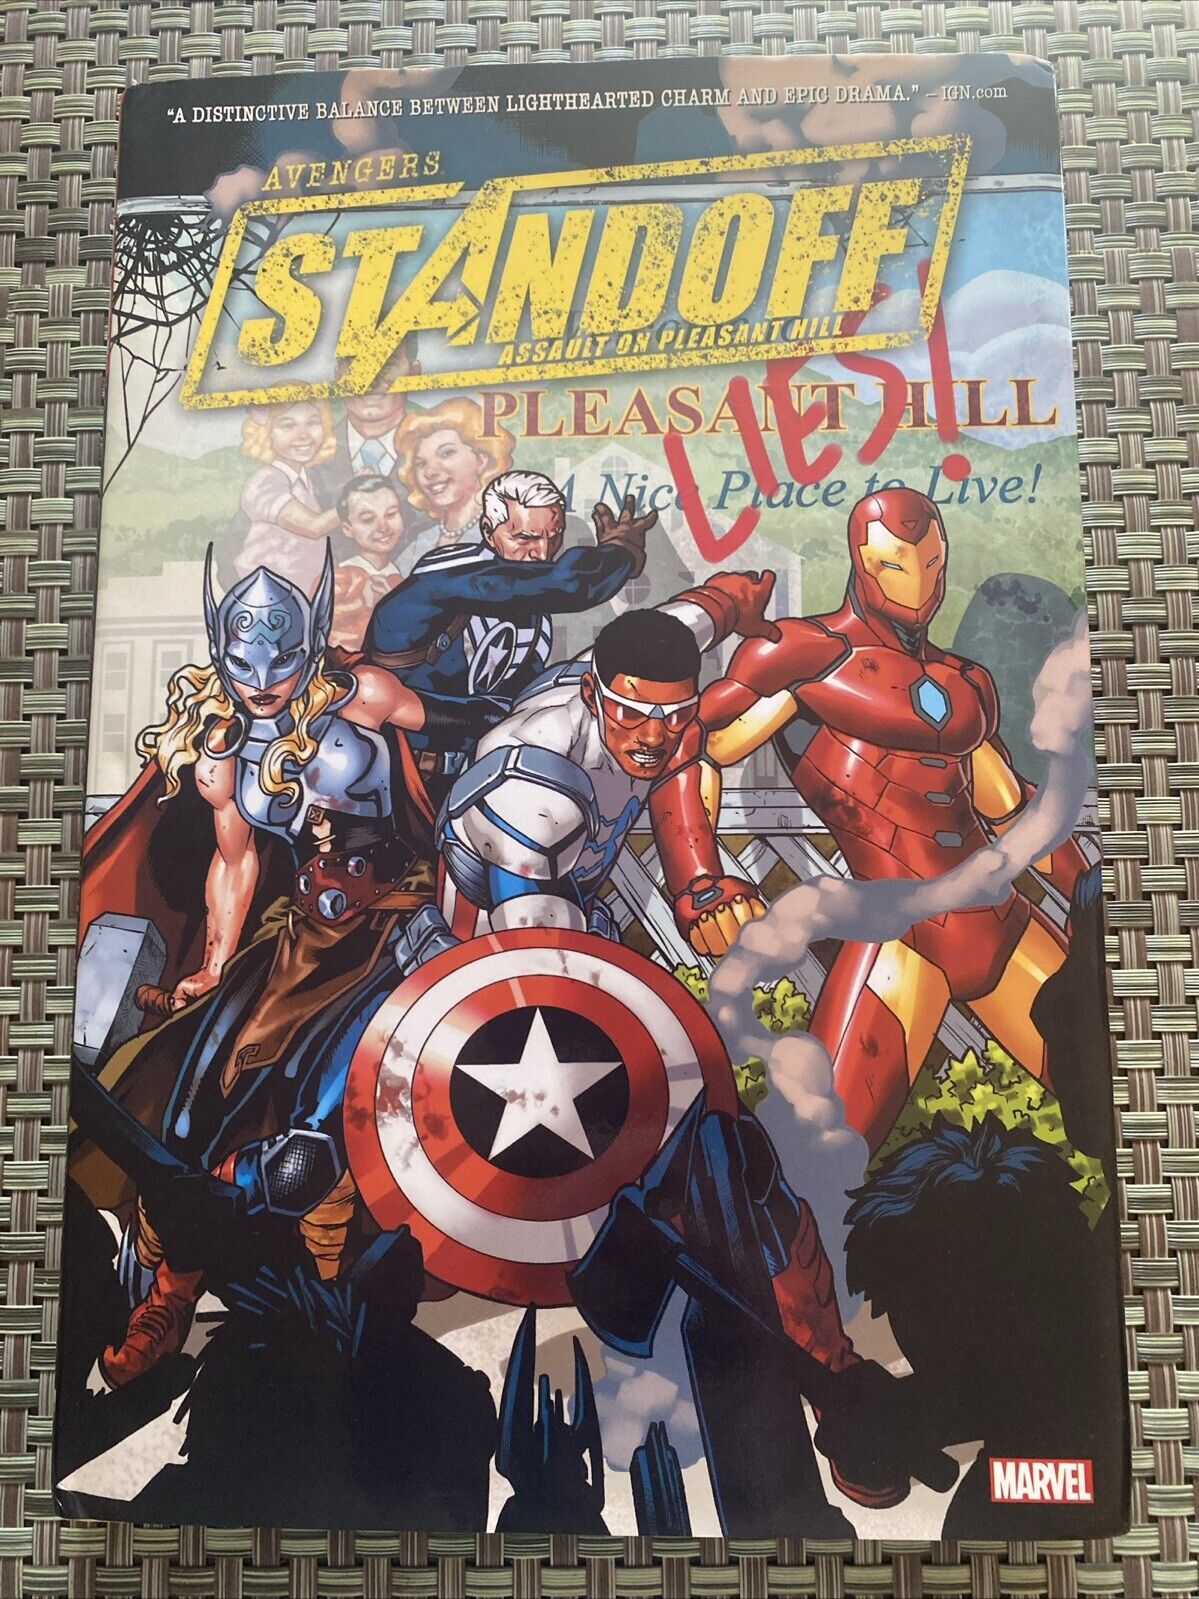 The Avengers: Standoff (Marvel Comics 2016) Hardcover